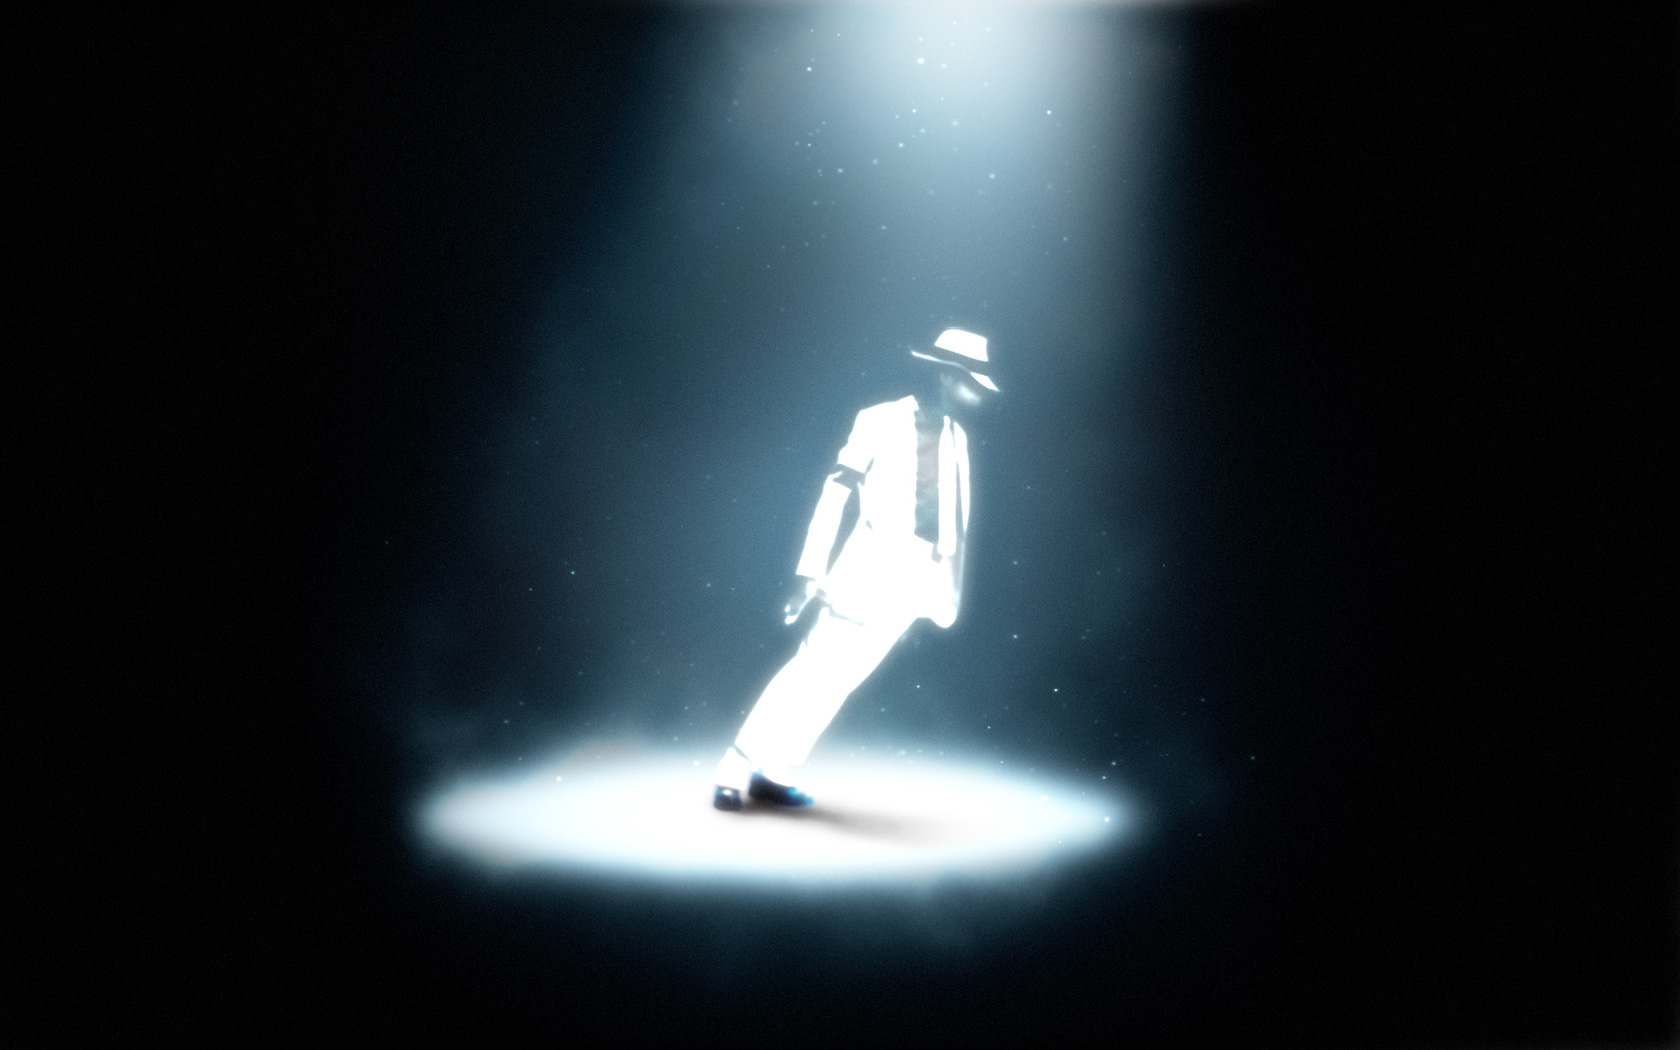 Wallpaper of the Week #55 - Michael Jackson Tribute